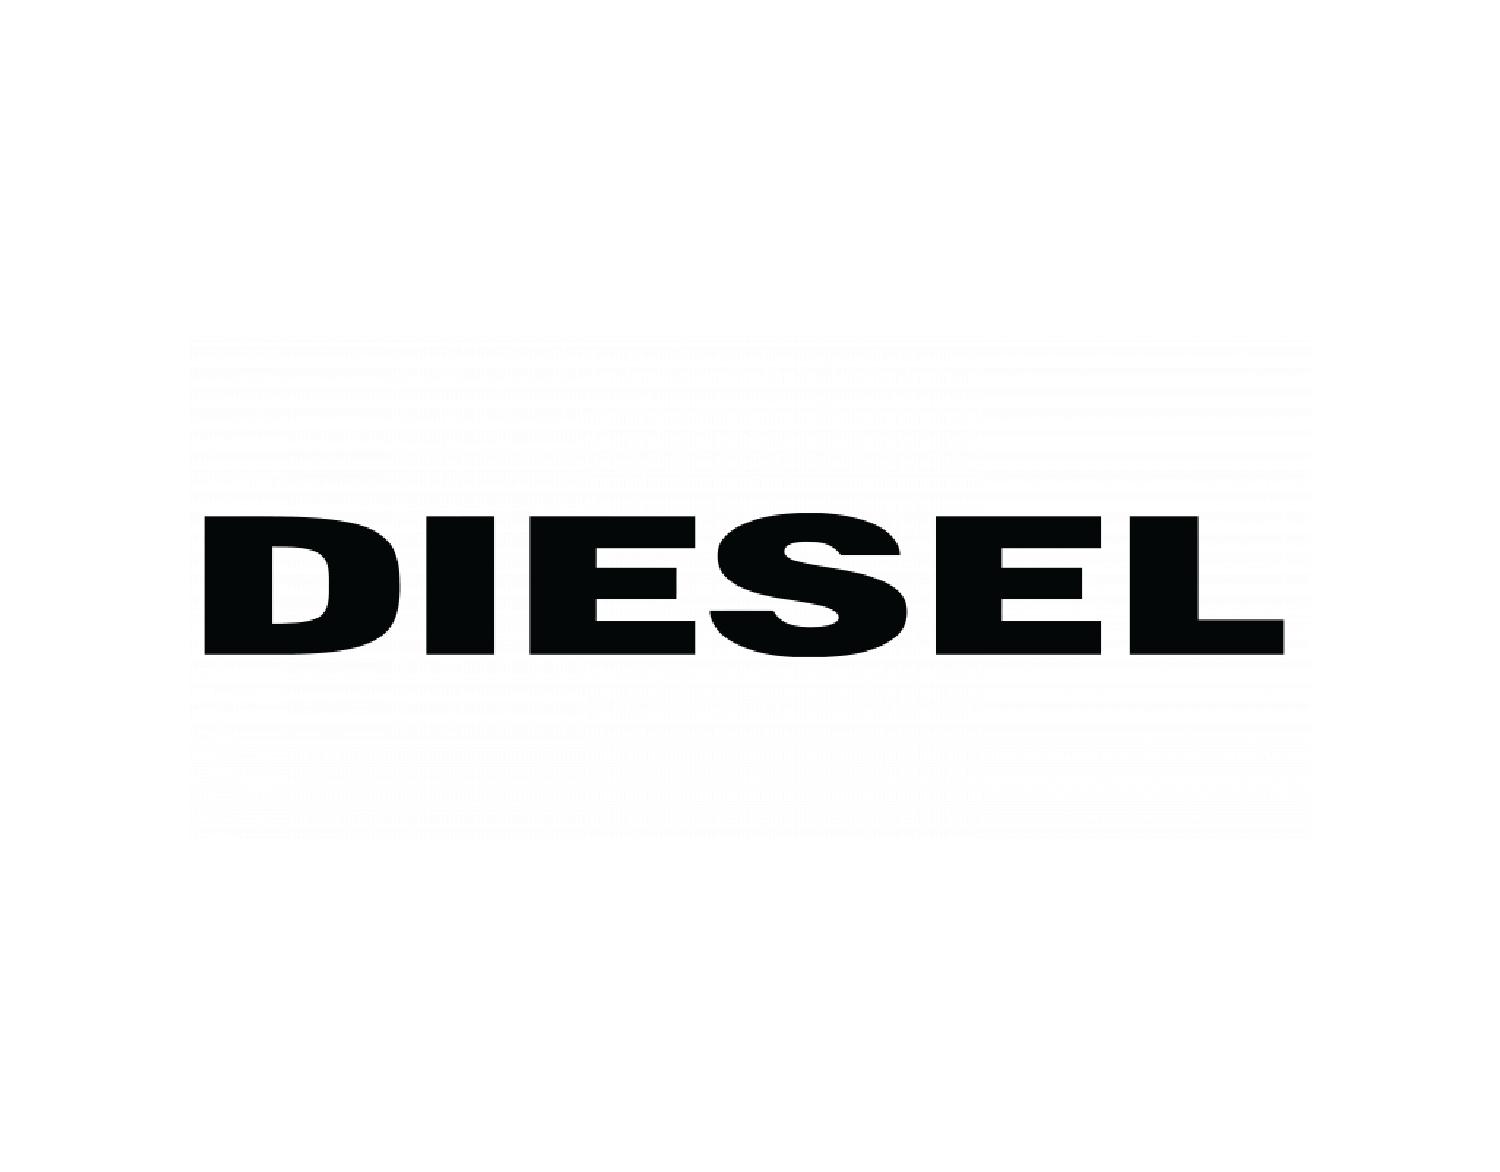 Diesel is the phrase of This
				old Diesel logo. It's written in a black, bold, sans serif font.